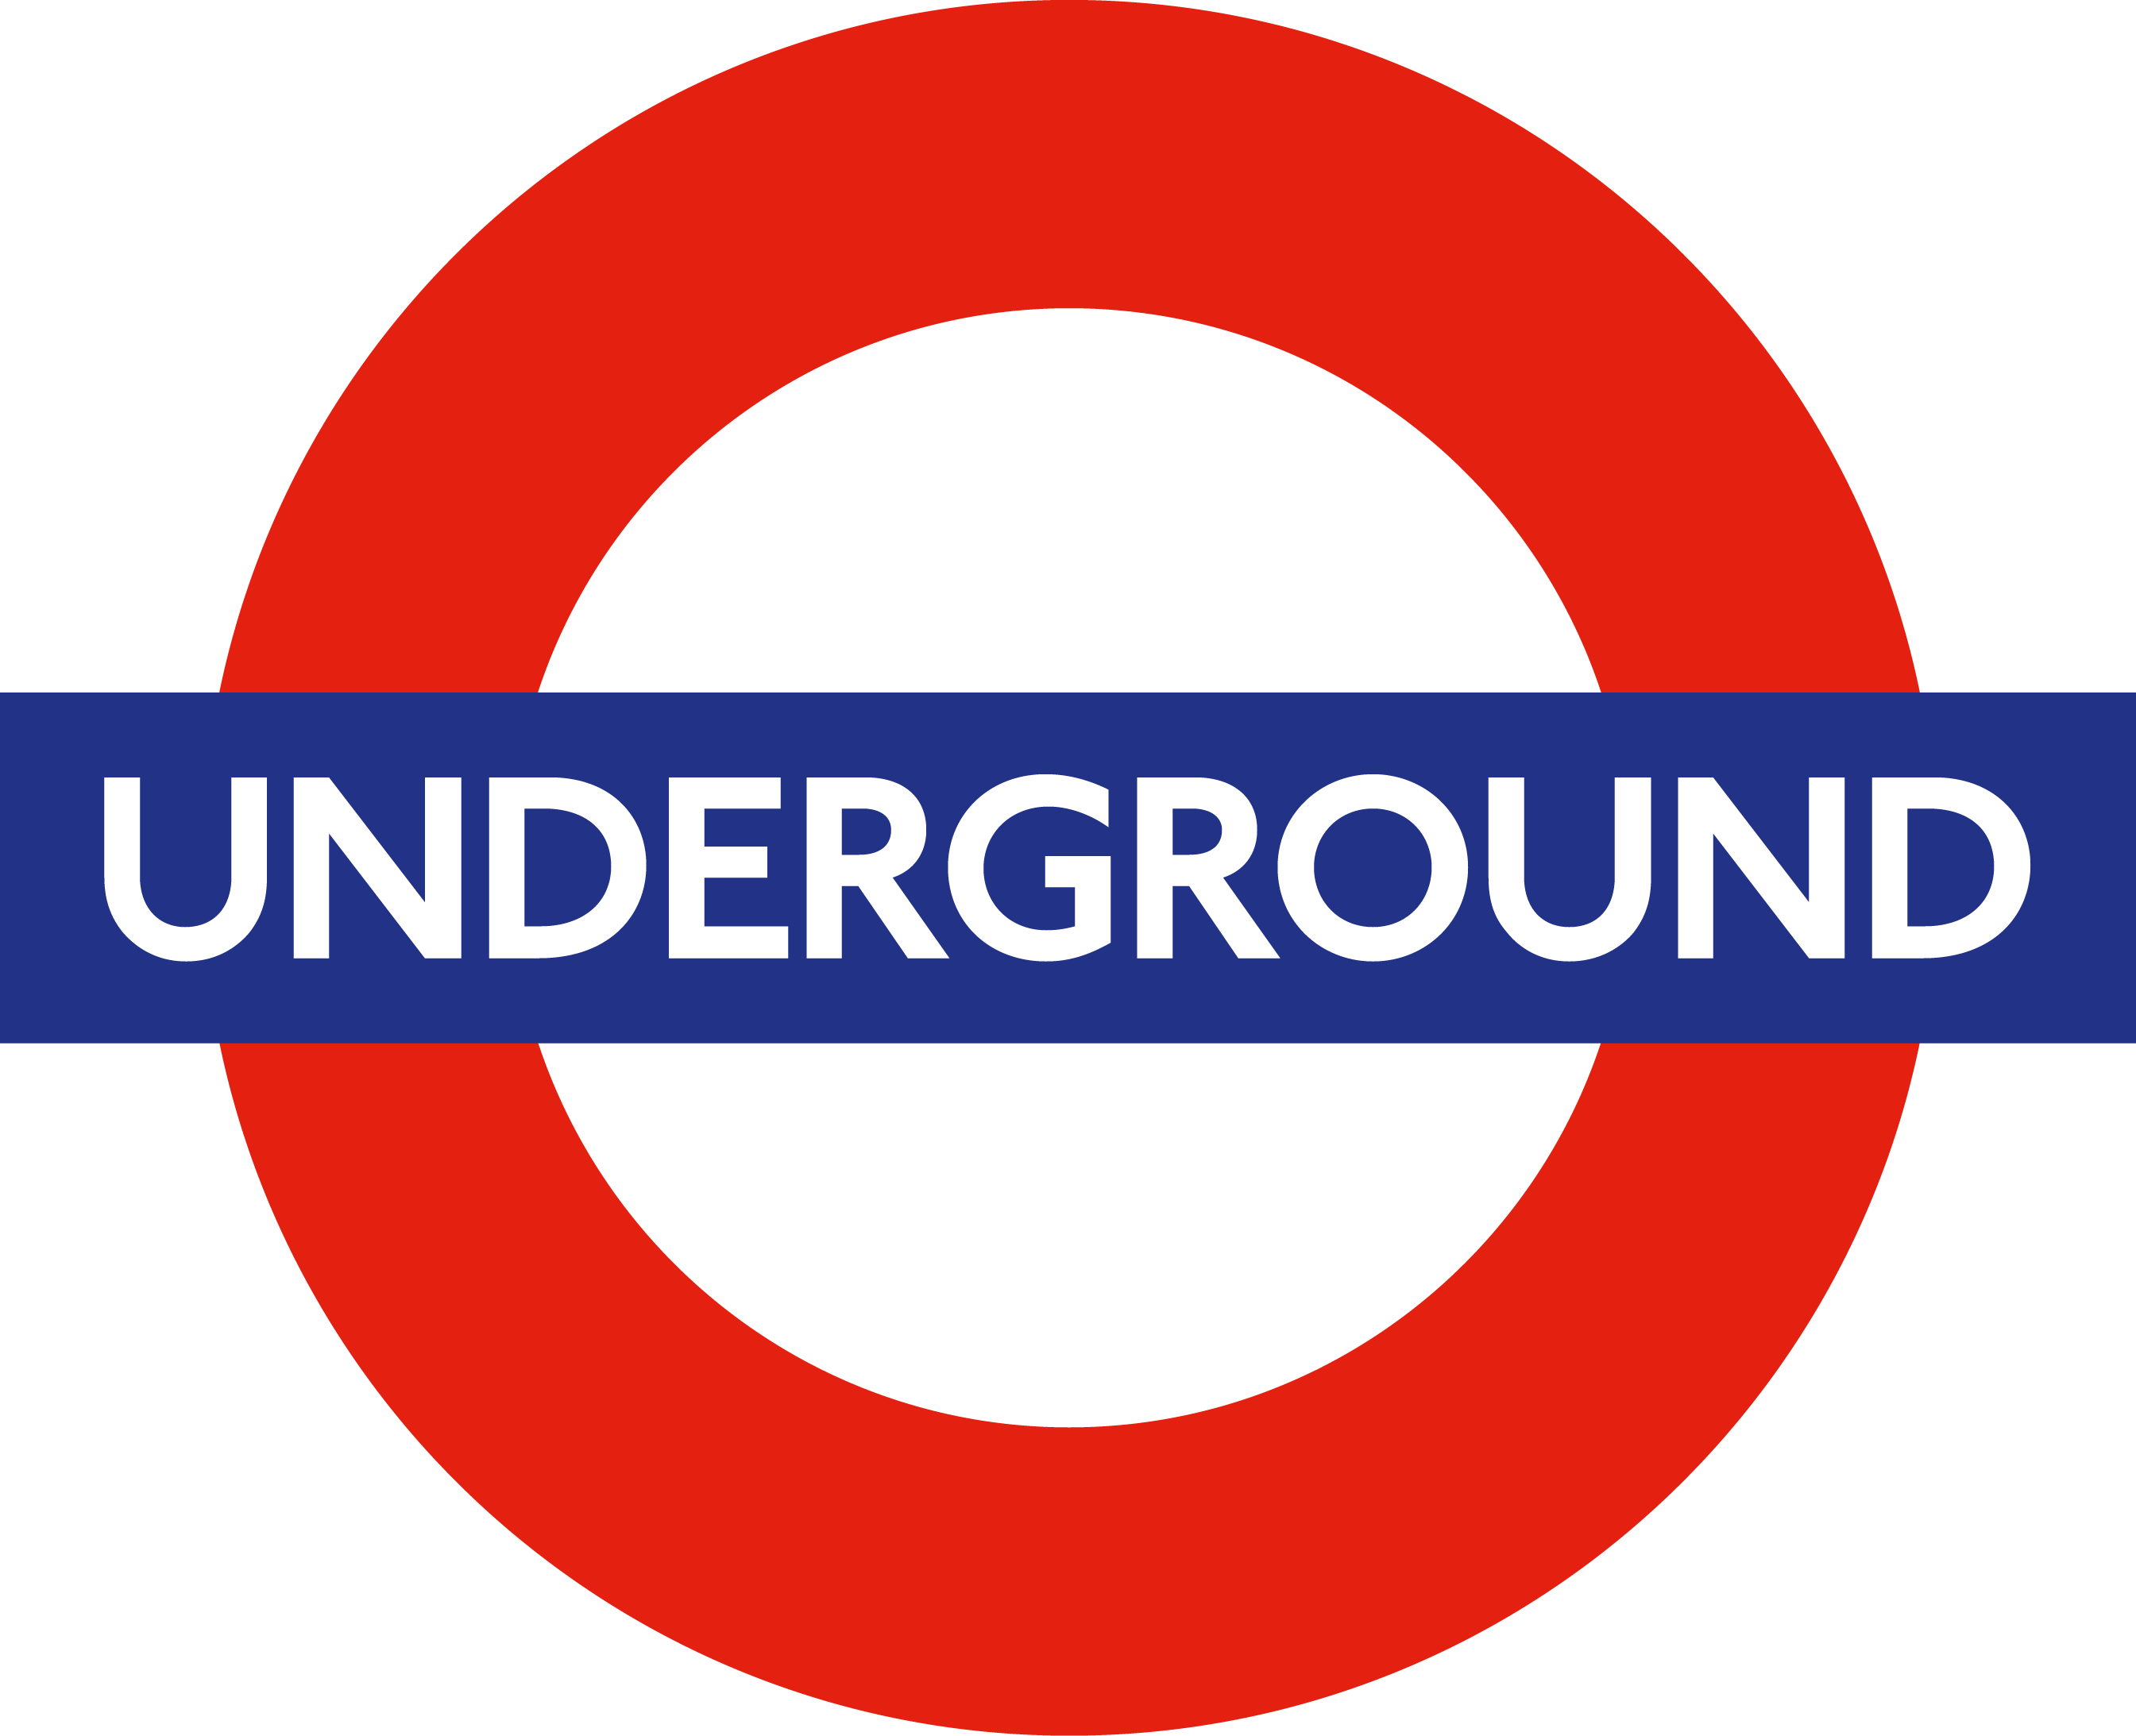 London Underground Logo. Free Graphic, Design Elements, Clipart